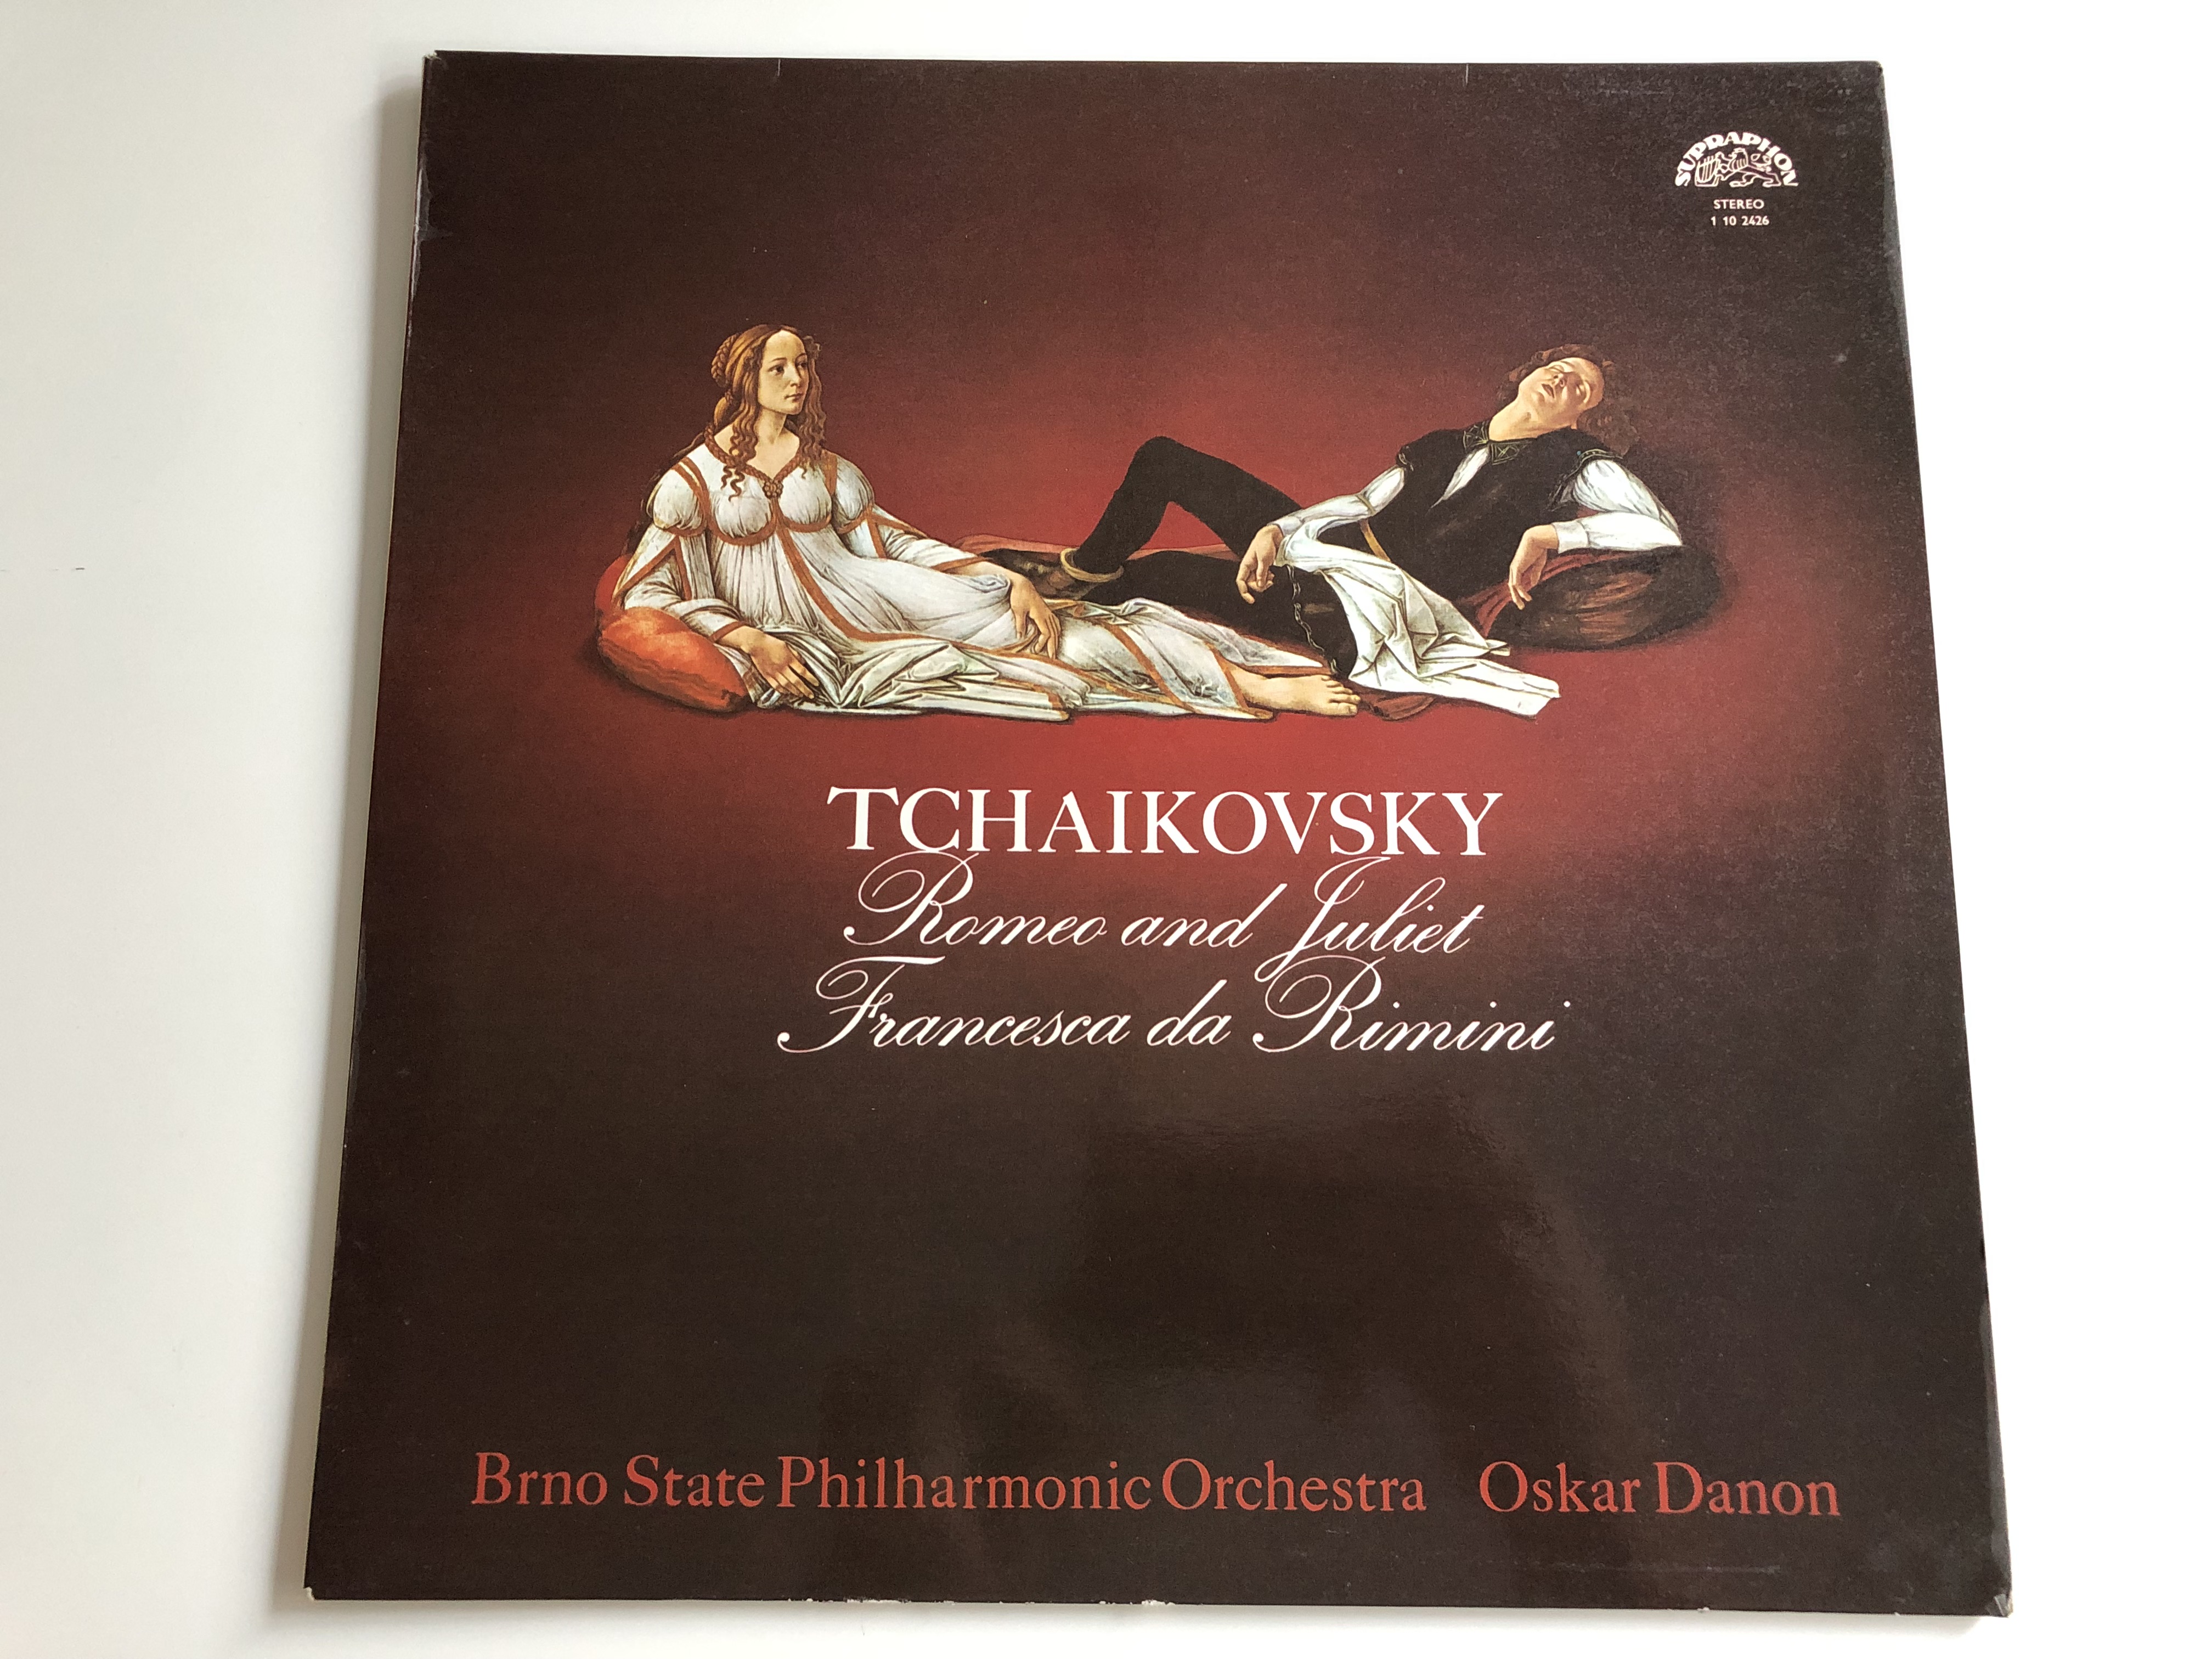 tchaikovsky-romeo-and-juliet-francesca-da-rimini-conducted-oskar-danon-brno-state-philharmonic-orchestra-supraphon-lp-stereo-1-10-2426-1-.jpg